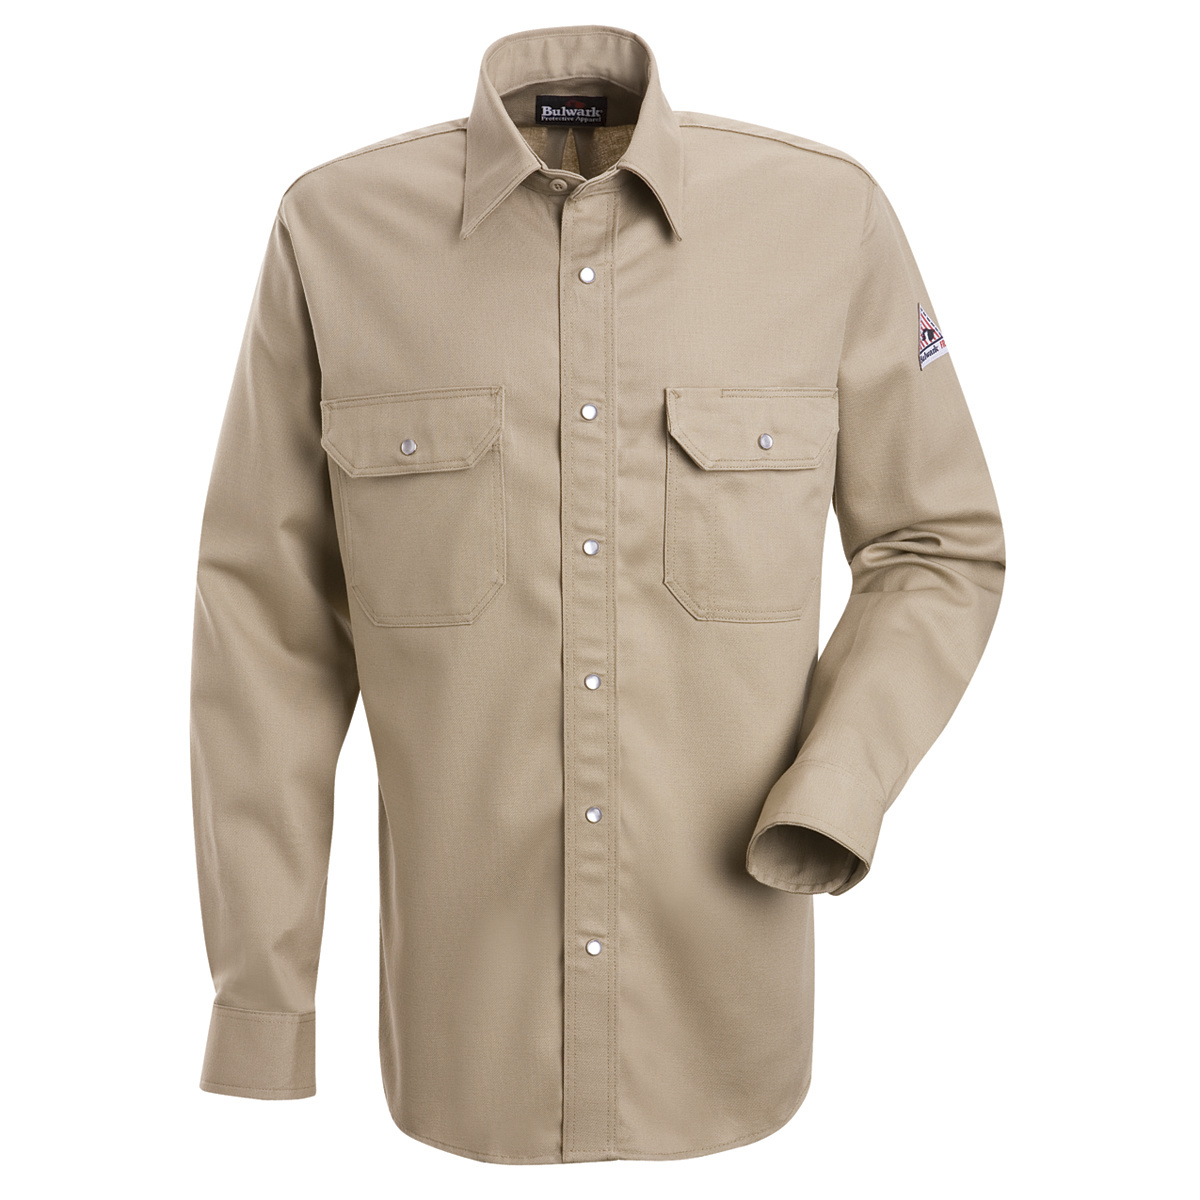 Bulwark® Medium Tall Tan EXCEL FR® Cotton Flame Resistant Uniform Shirt With Snap Front Closure